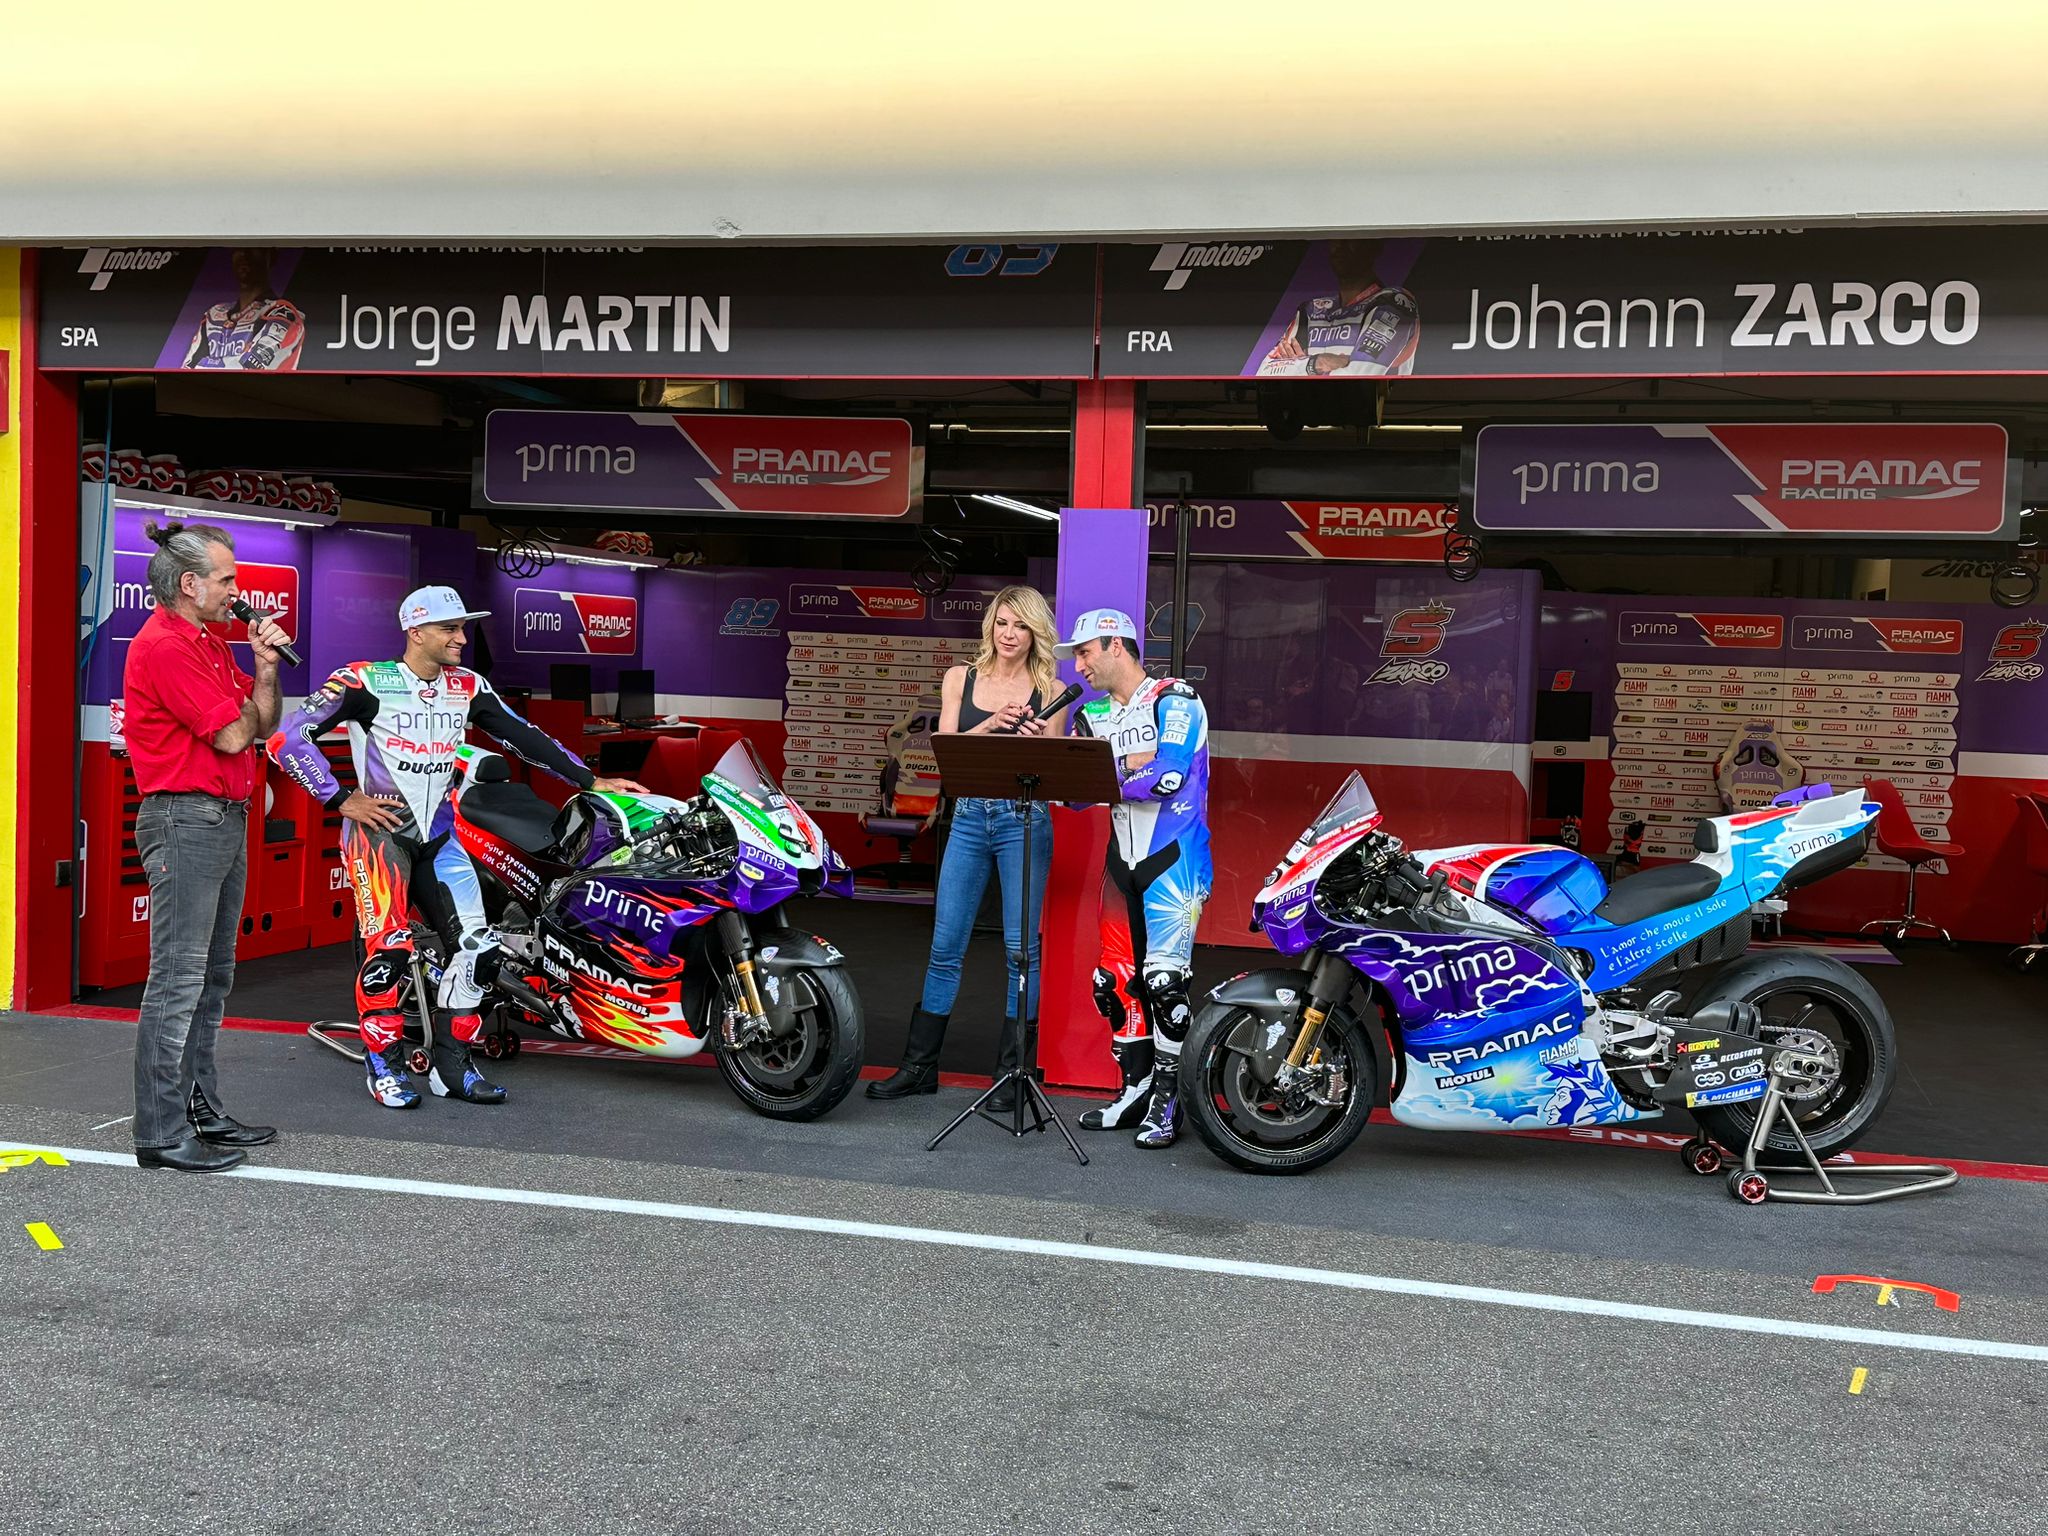 MotoGP, Jorge Martin and Johann Zarco at Mugello between hell and heaven GPone